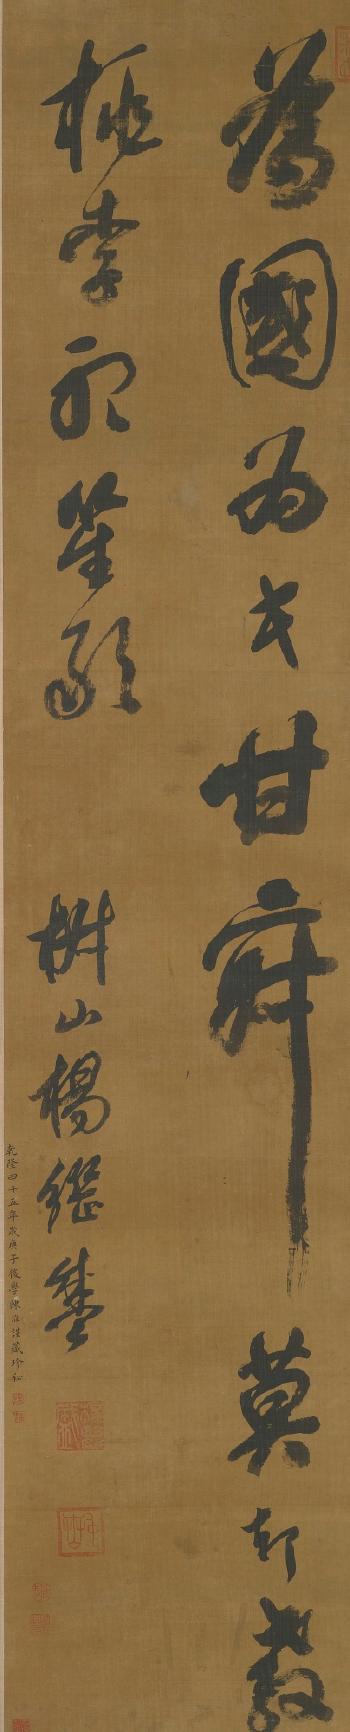 Calligraphy In Running Script by 
																	 Yang Jisheng